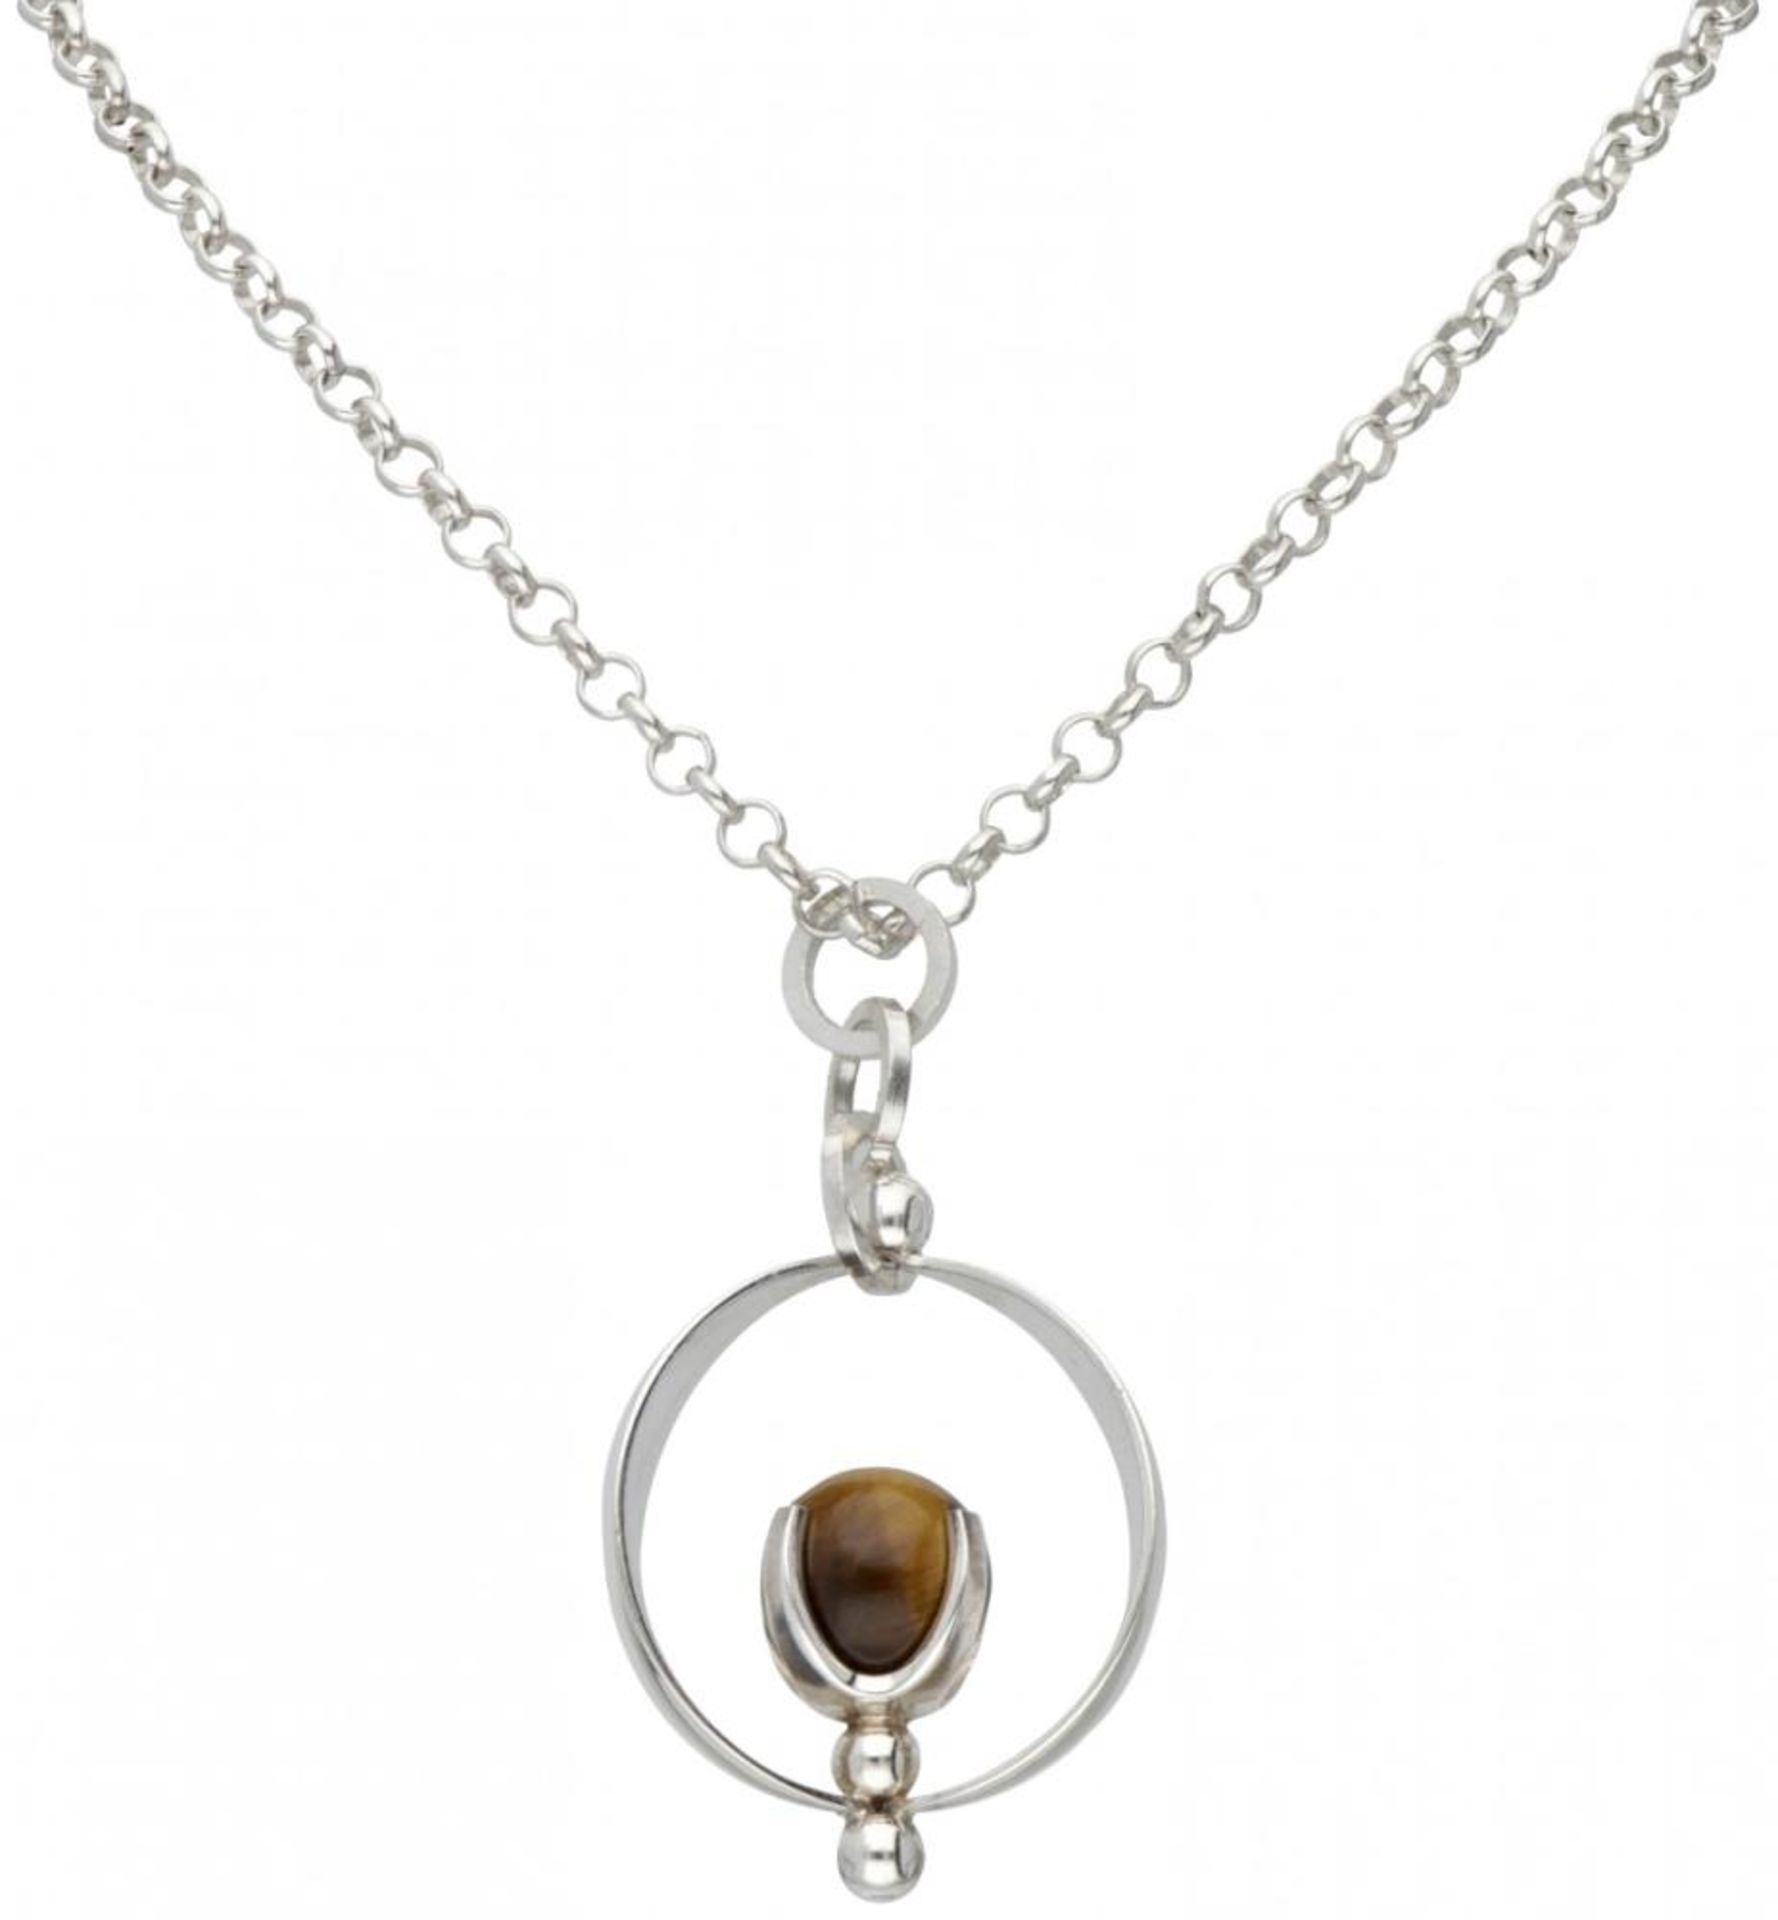 Silver necklace with a tiger eye pendant by Finnish designer Kupittaan Kulta.